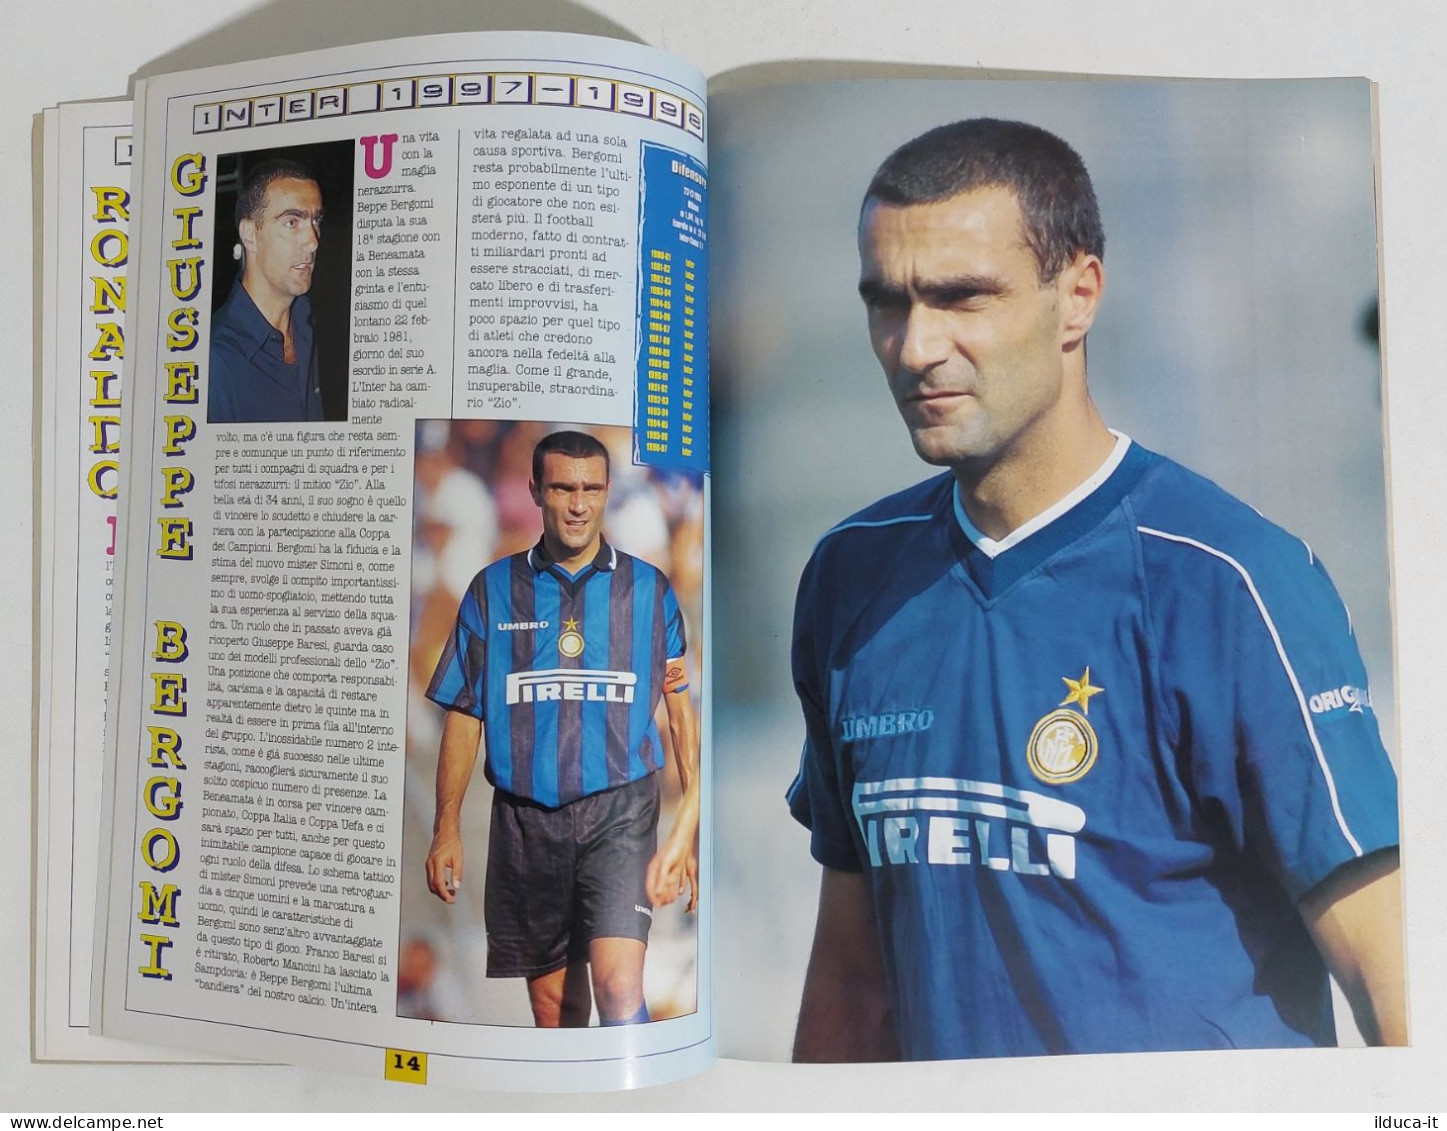 39587 Roberto Nerani - INTER 1997-1998 - Supercampioni - Sports